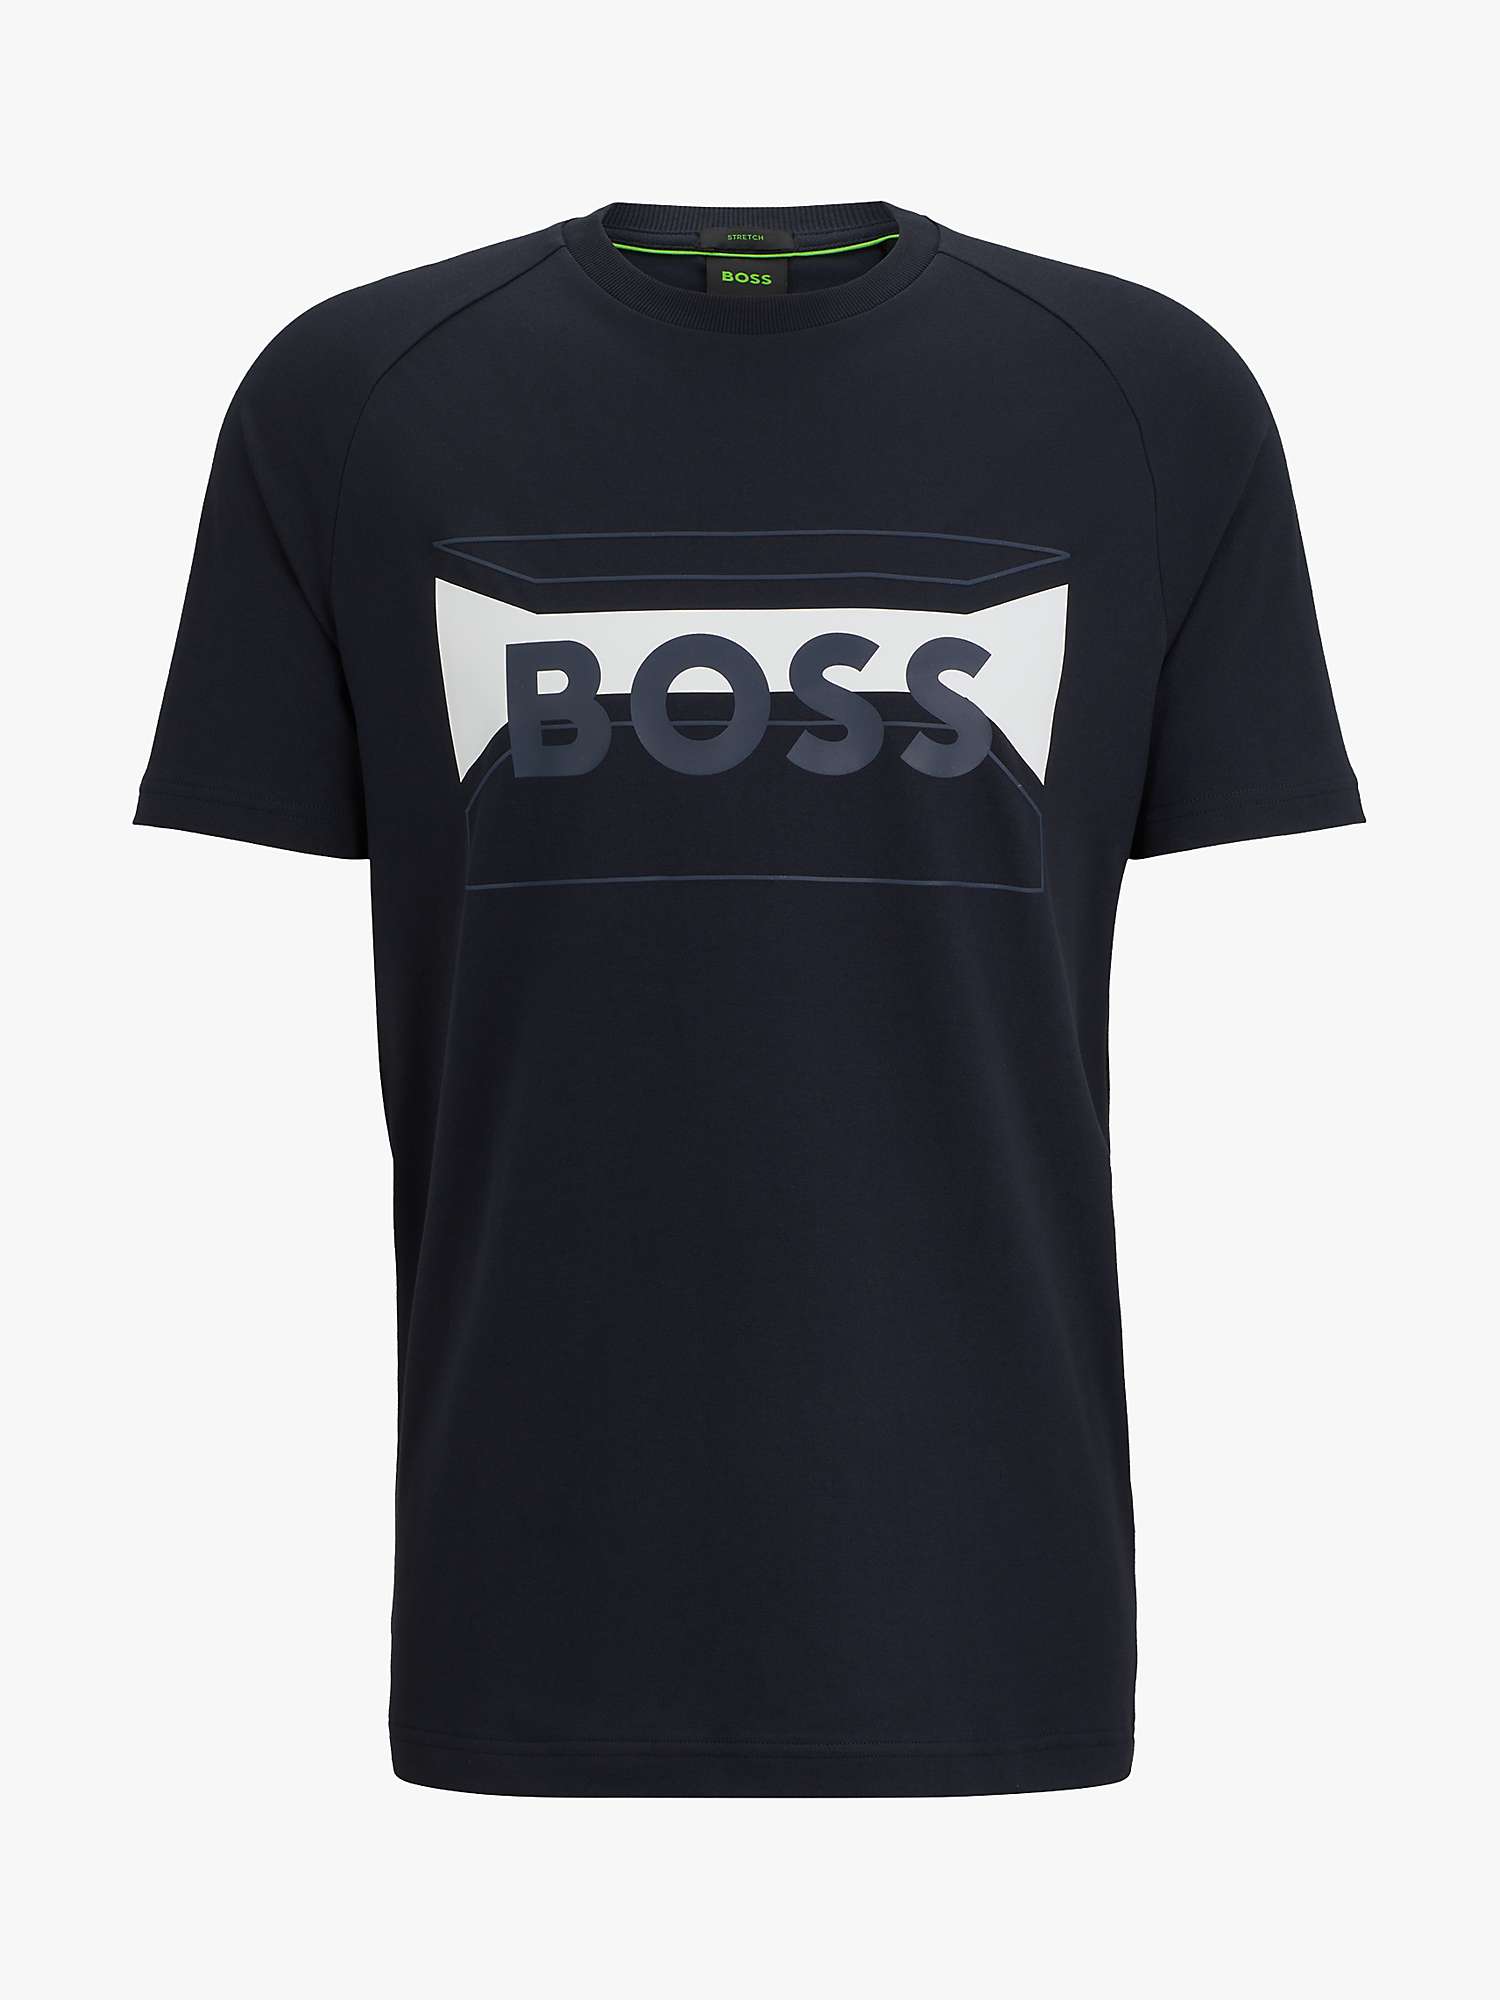 Buy BOSS Tee 2 402 Short Sleeve T-Shirt, Dark Blue Online at johnlewis.com